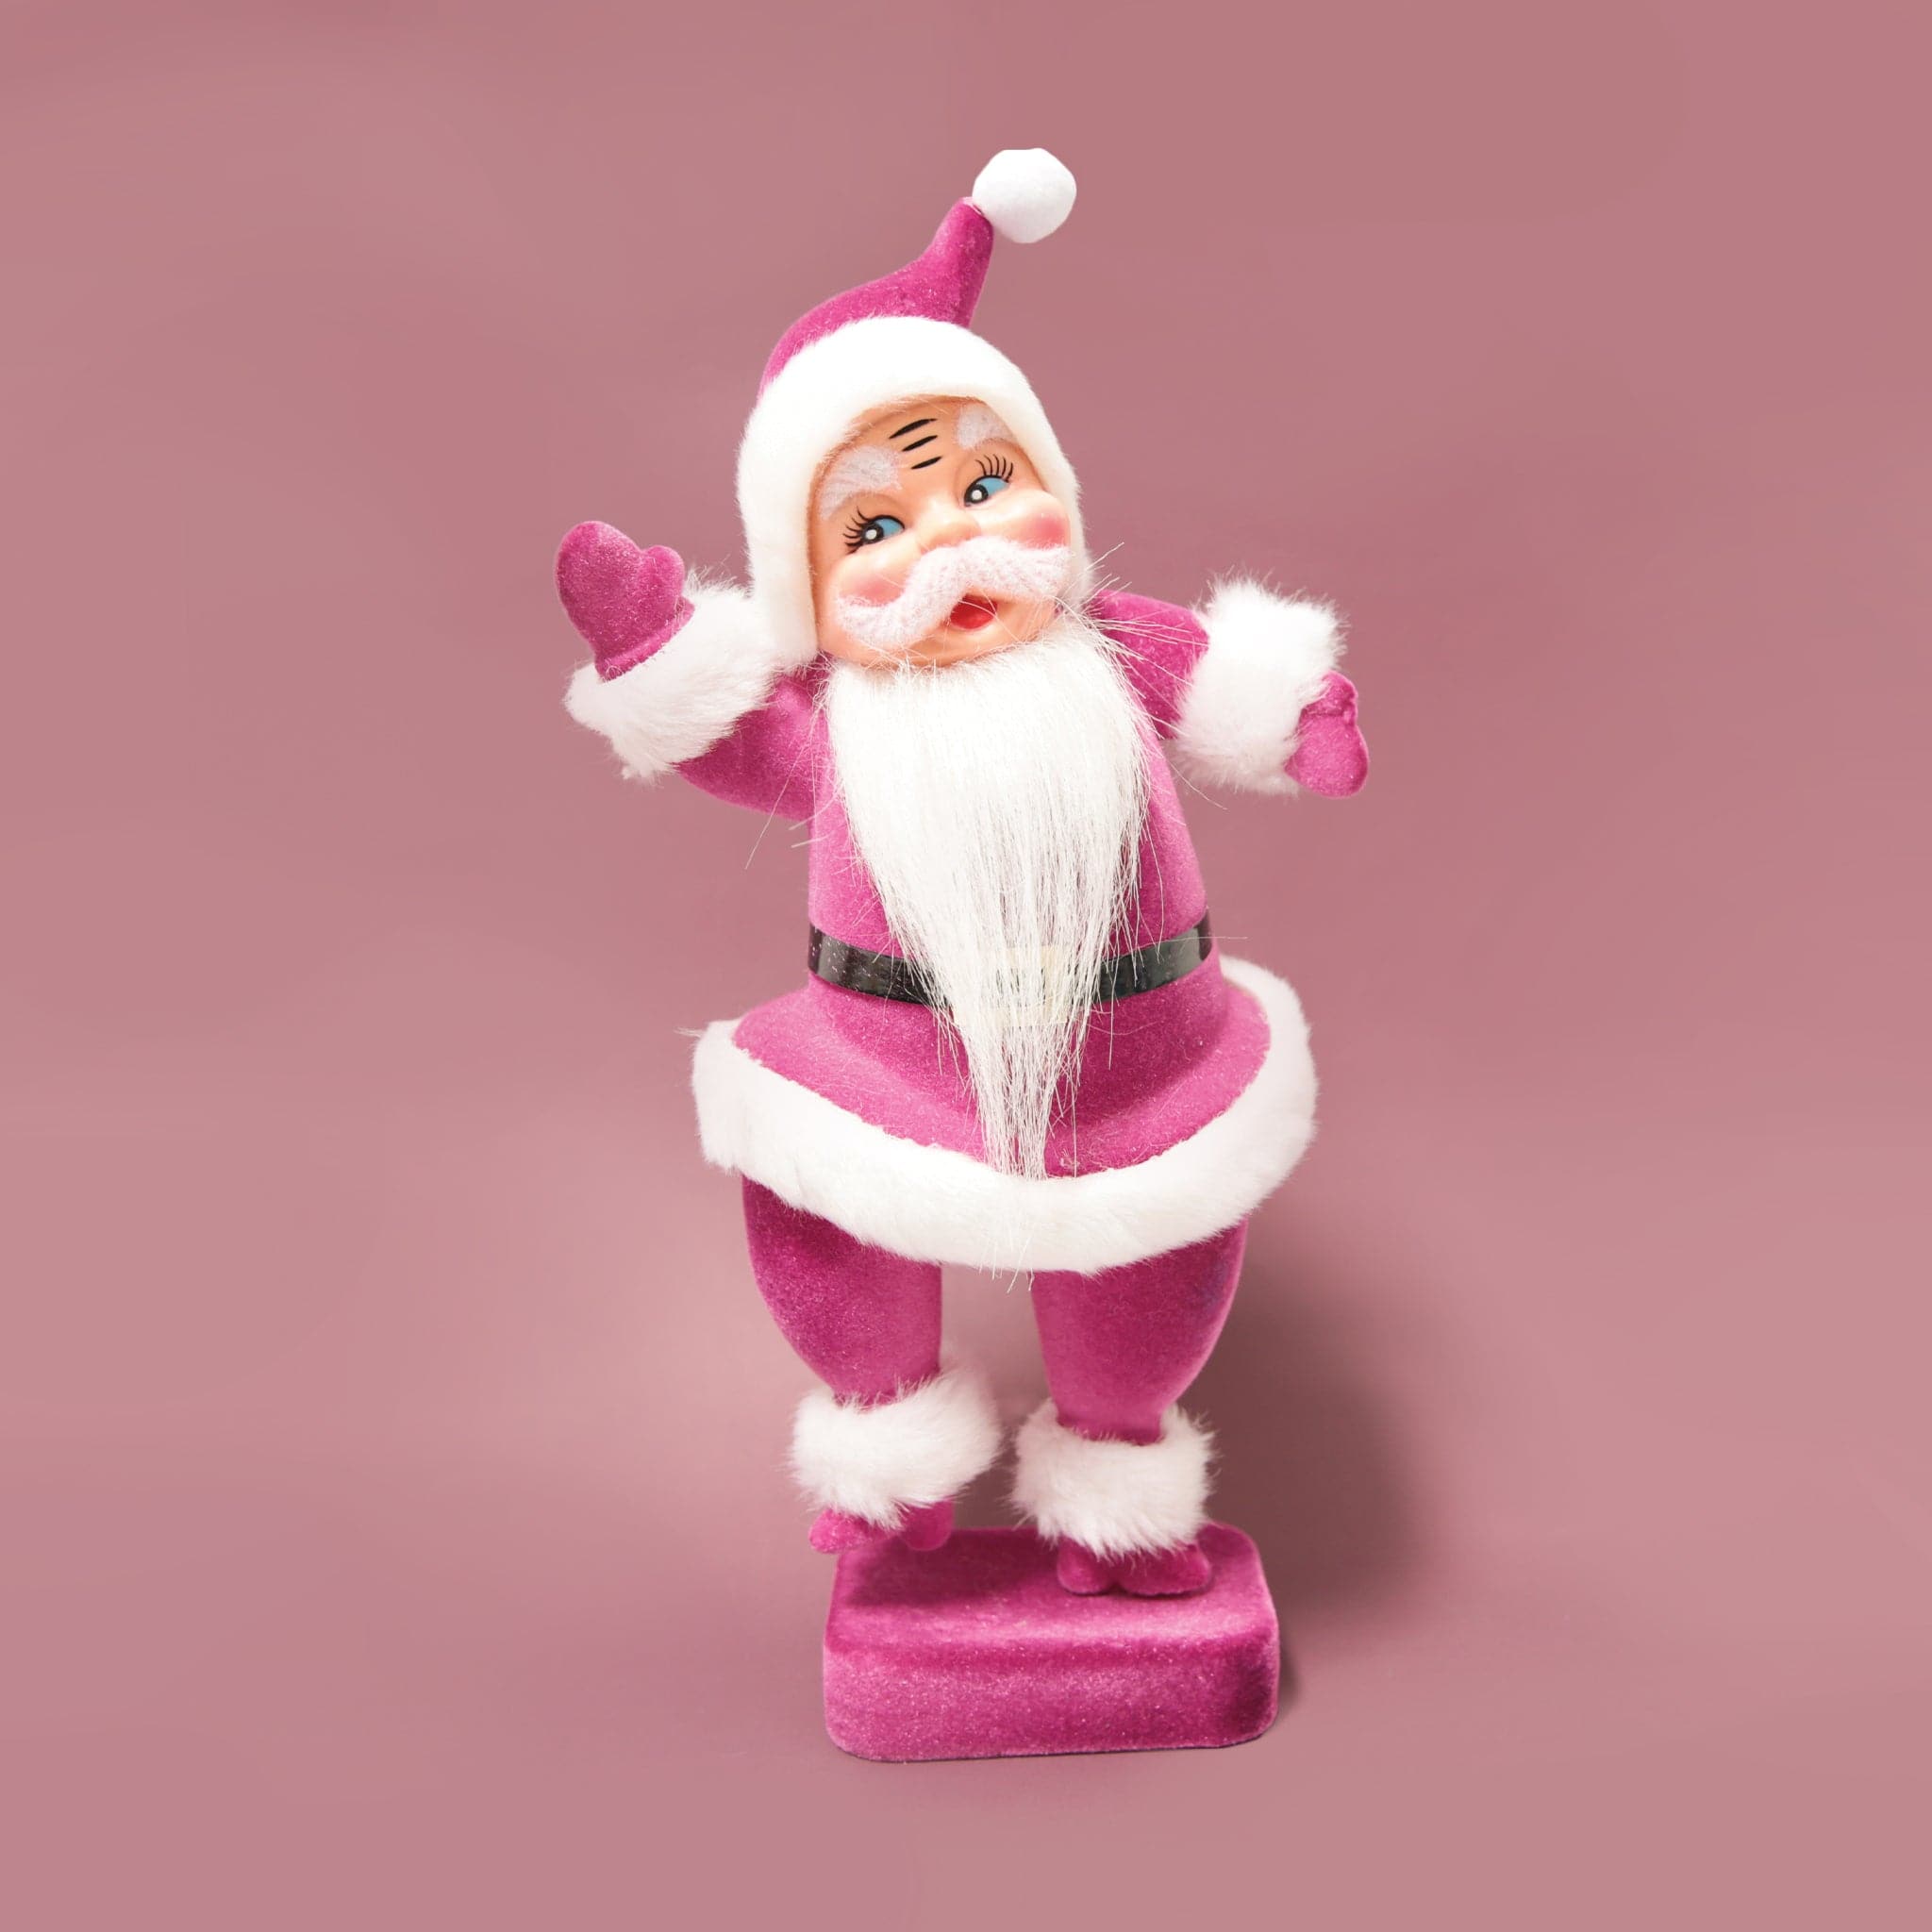 A plastic Santa figurine with a violet suit on.